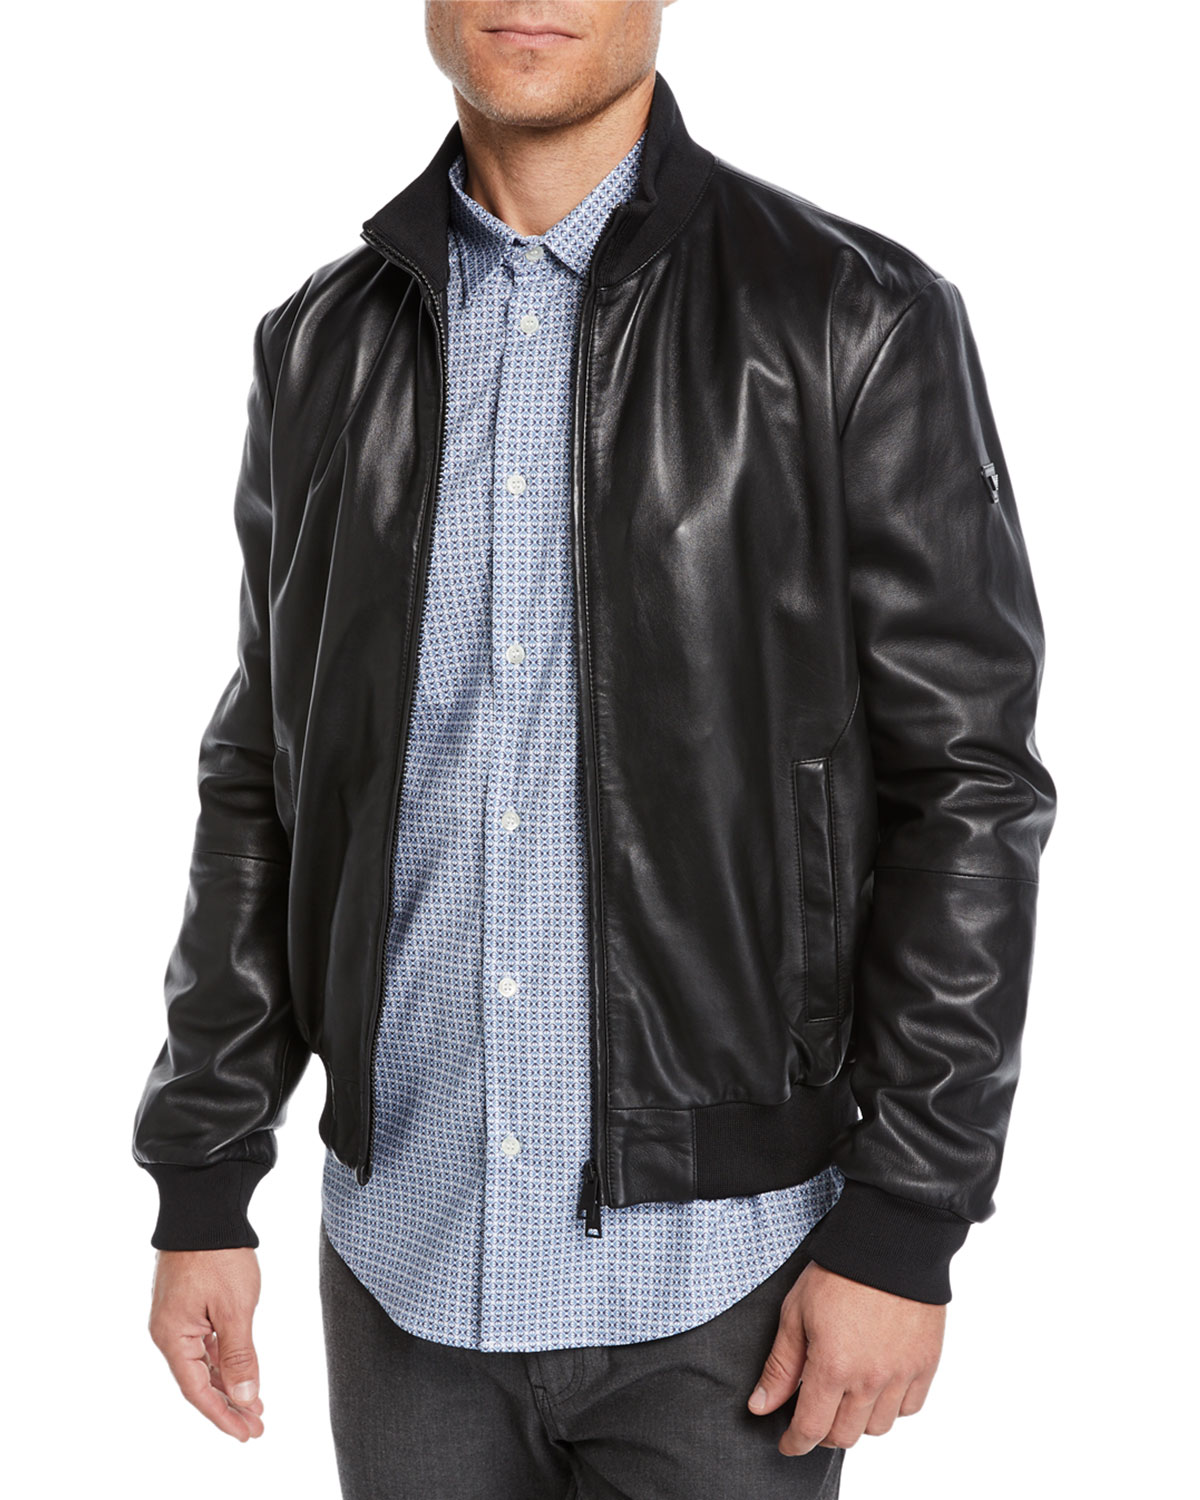 armani jeans leather jacket price - 61 